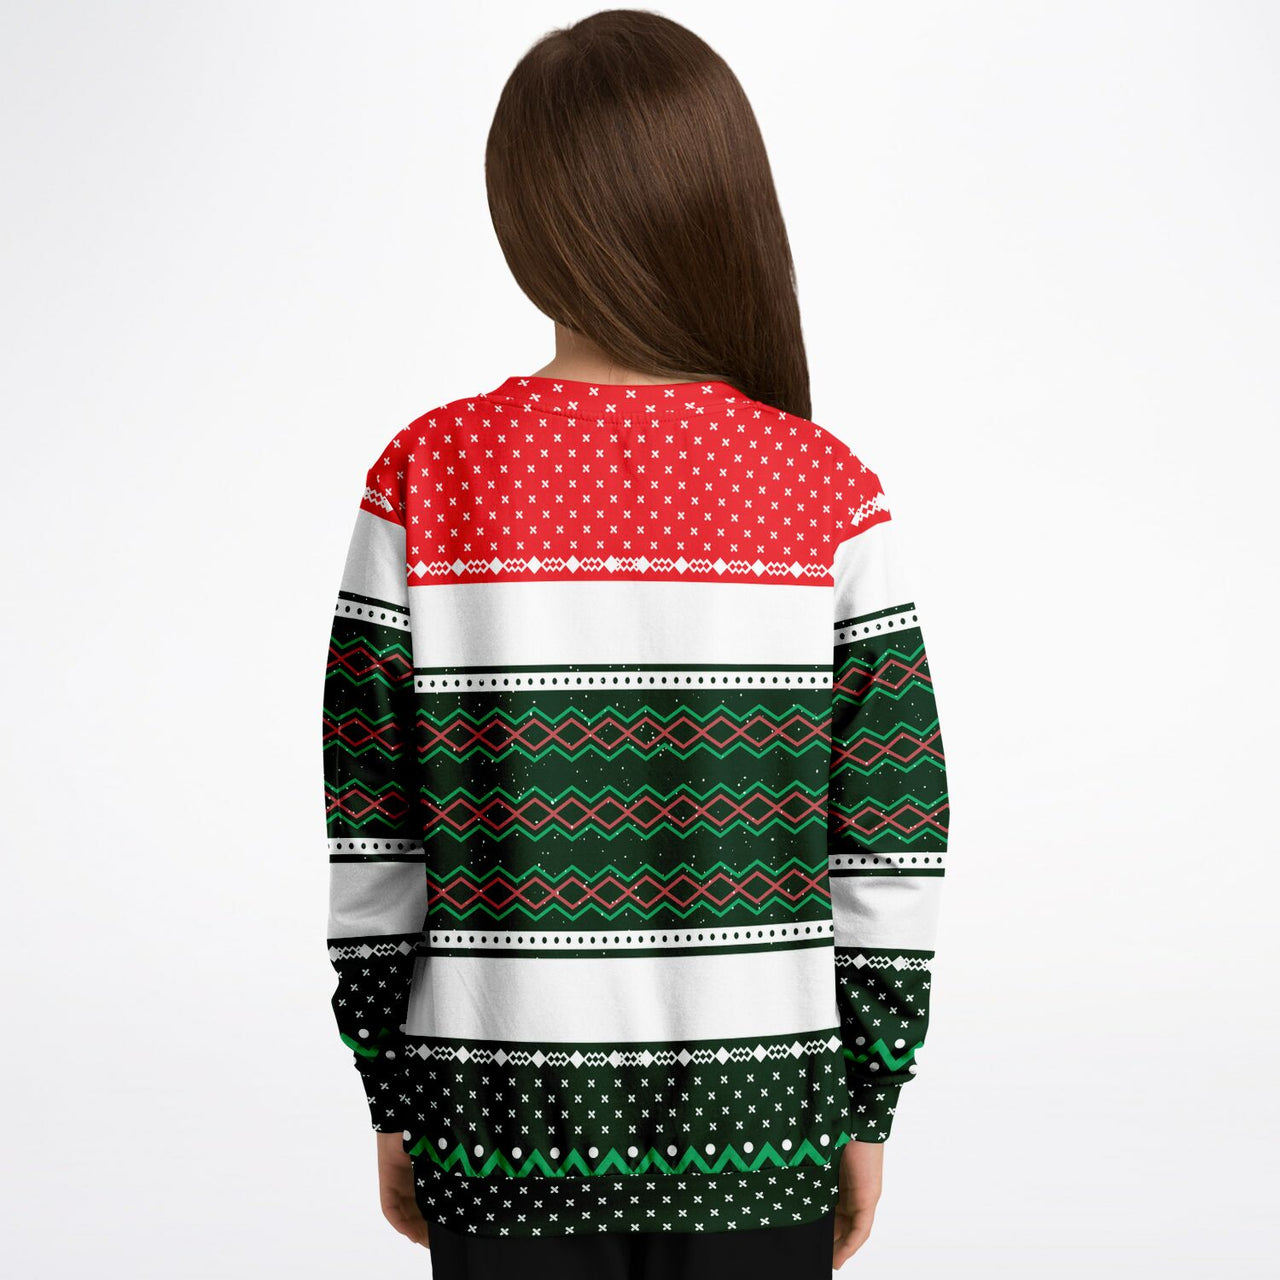 Magical Unicorn Ugly Christmas Fashion Youth Sweatshirt – AOP